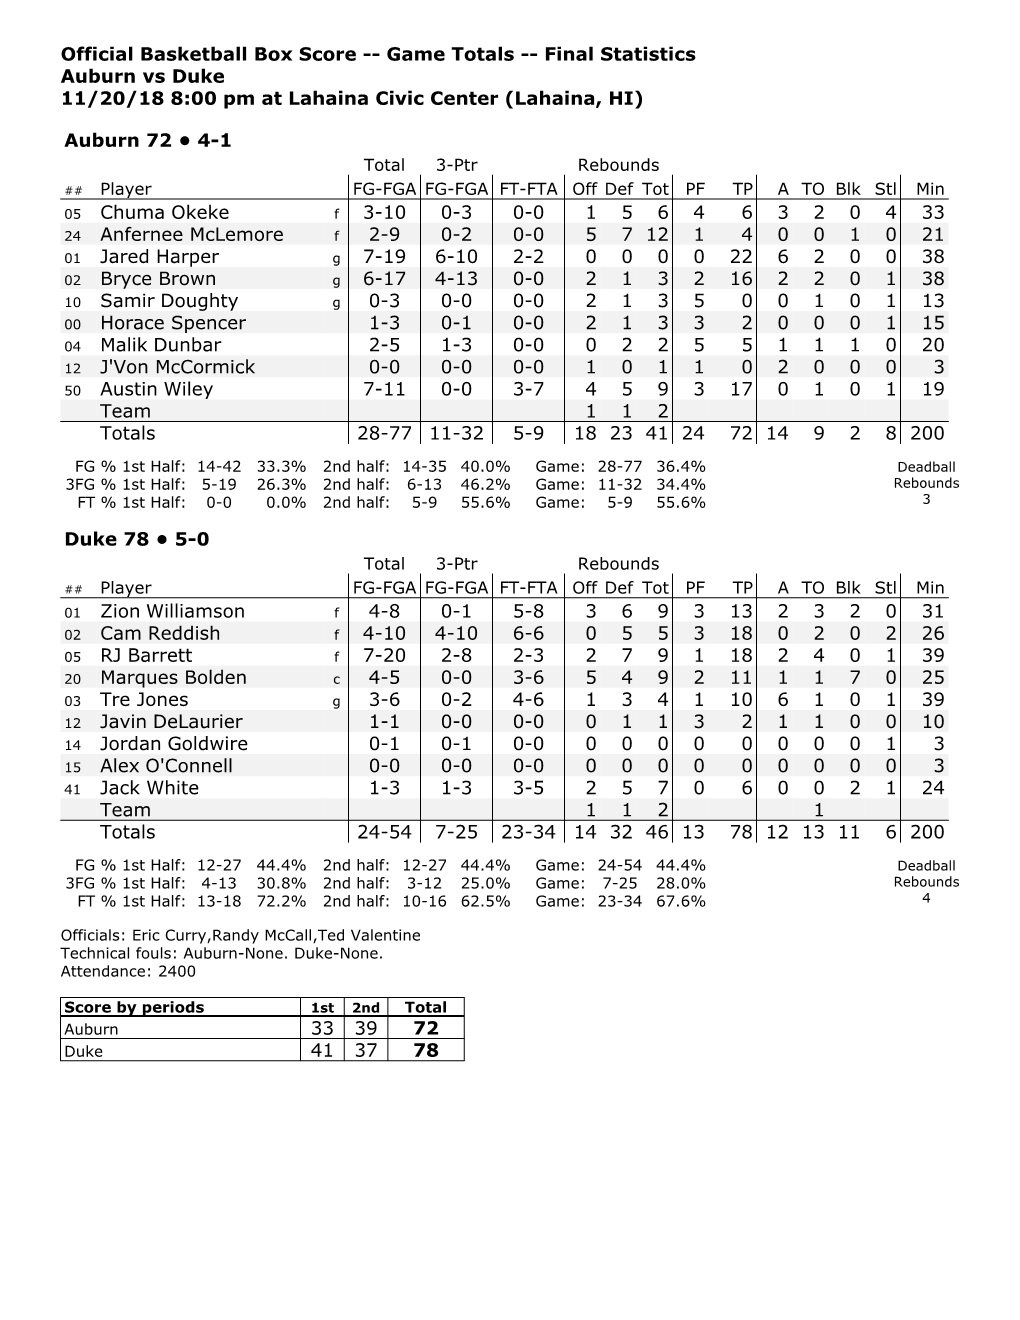 Official Basketball Box Score -- Game Totals -- Final Statistics Auburn Vs Duke 11/20/18 8:00 Pm at Lahaina Civic Center (Lahaina, HI)